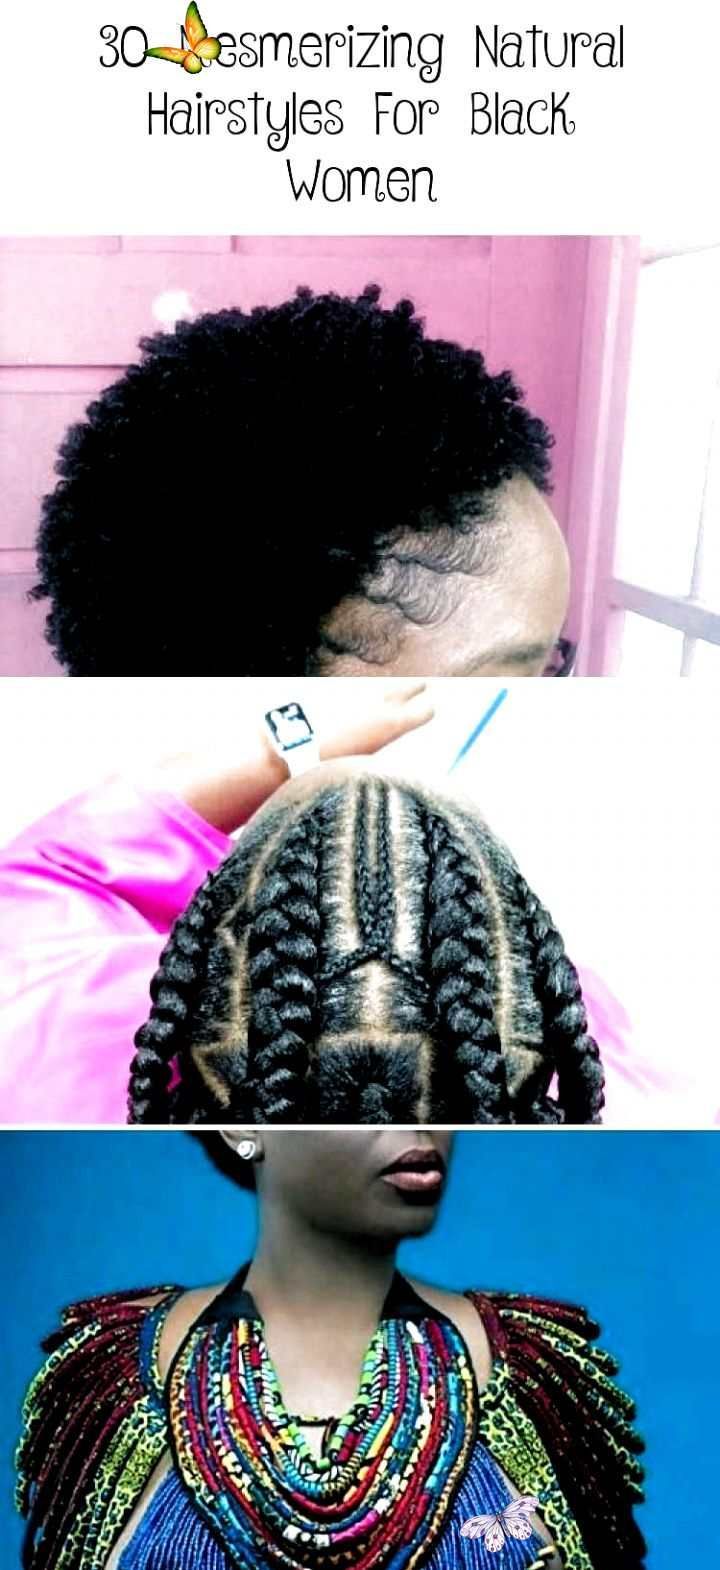 22 trendy hairstyles For Black Women ideas